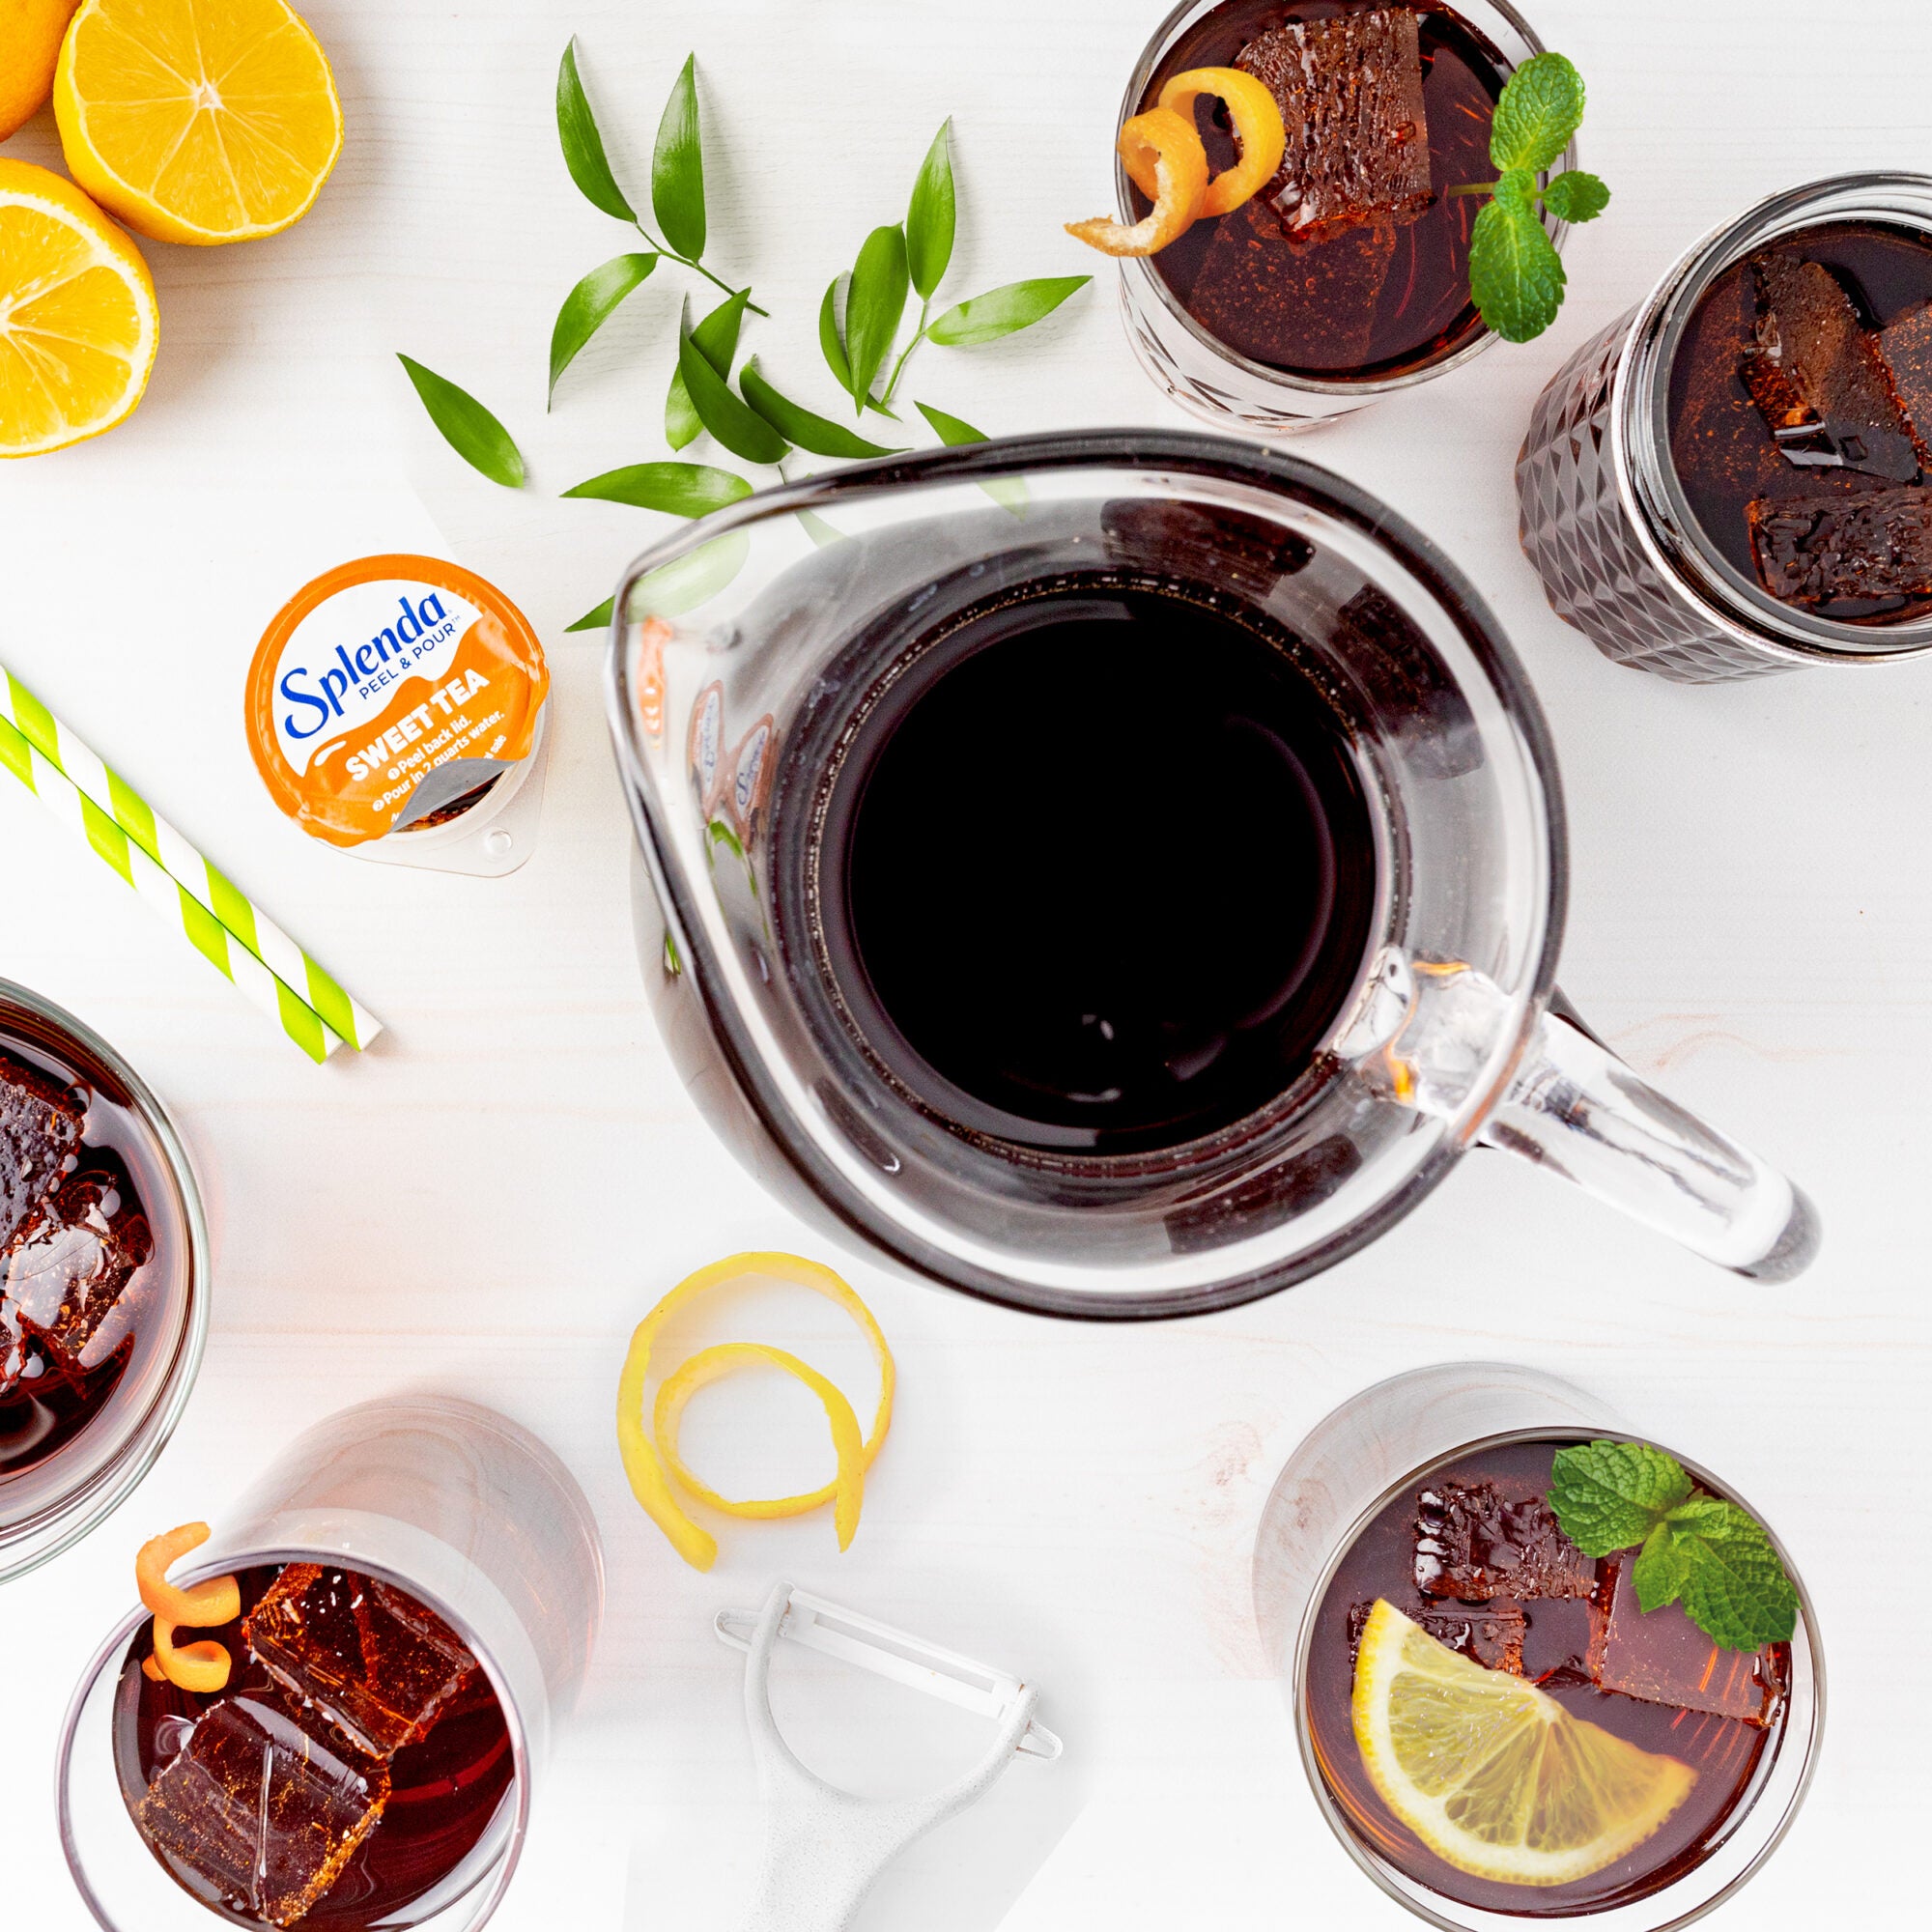 Splenda Peel & Pour Sweet Tea Zero Sugar Drink Mix – Delicious and Refreshing